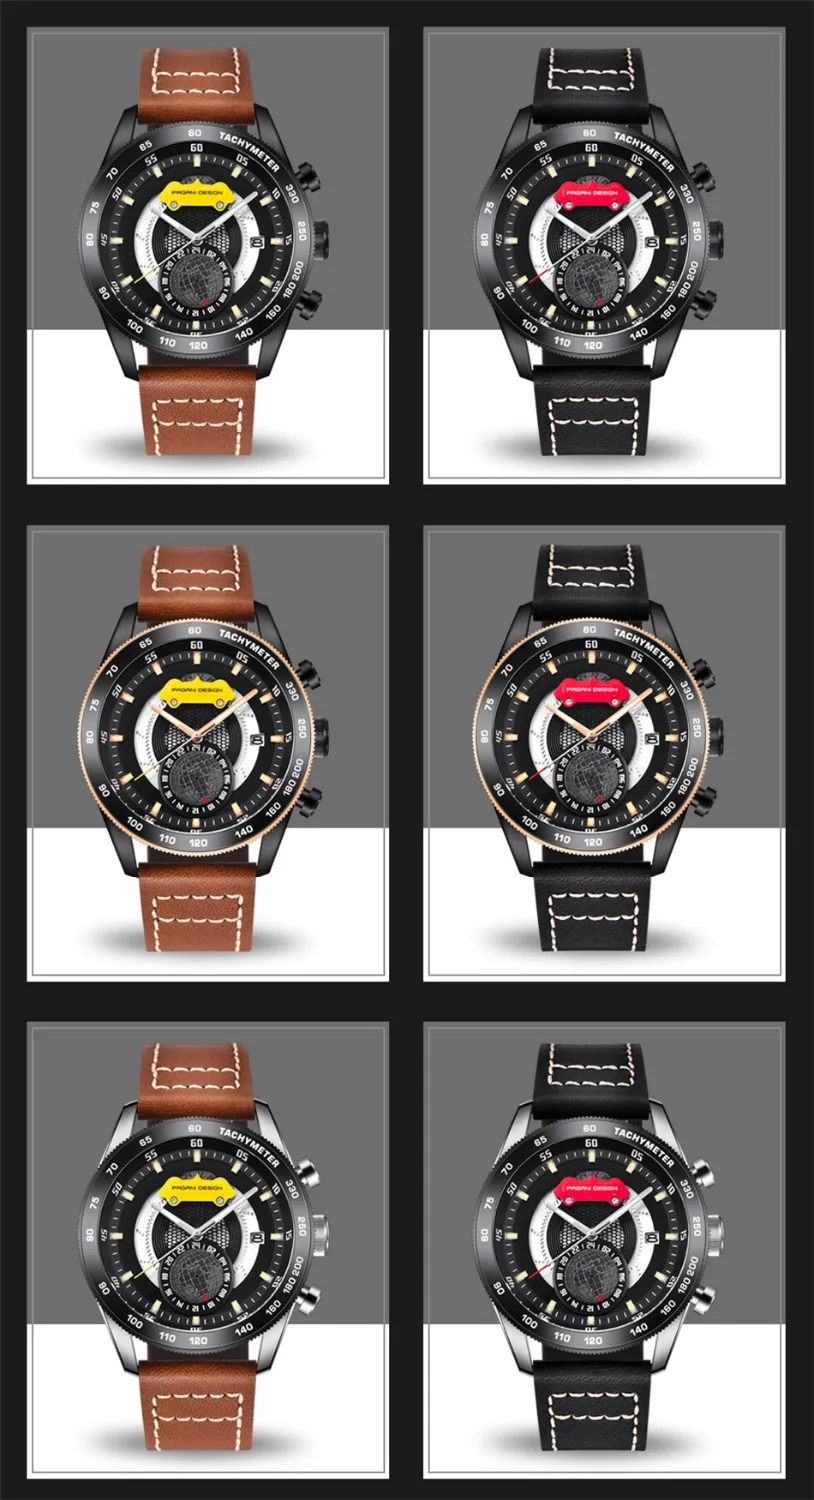 Brand de lux PAGANI DESIGN Cronograf Ceasuri Sport Barbati Reloj Hombre Complet din Oțel Inoxidabil Cuarț Ceasuri Relogio Masculino